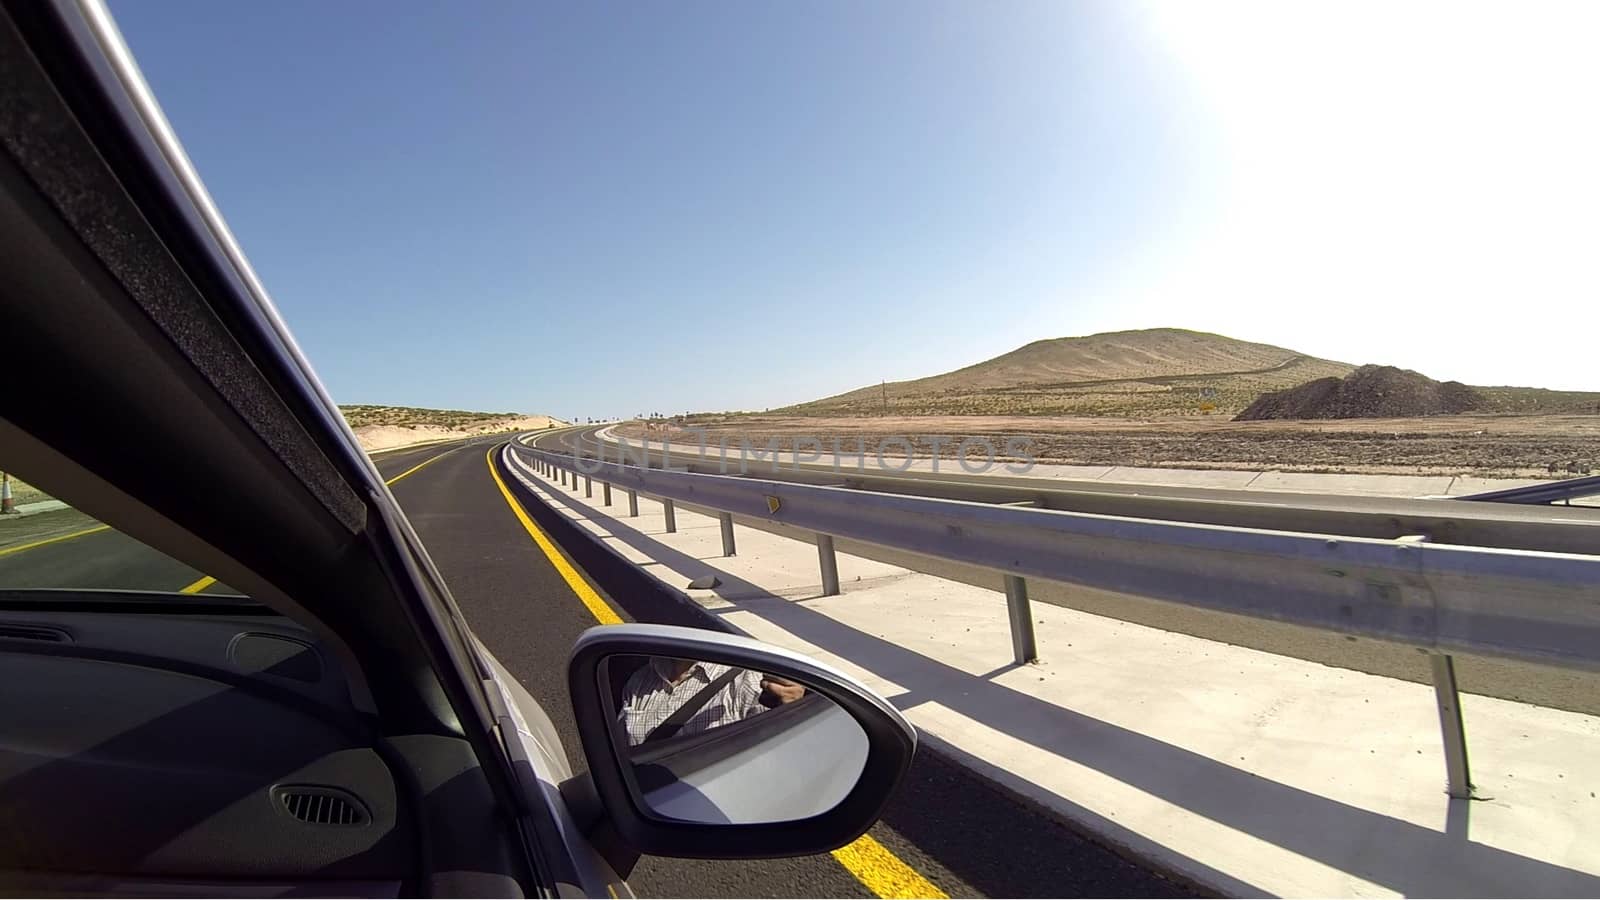 desert drive from car window - fuertaventura canary islands modern highway